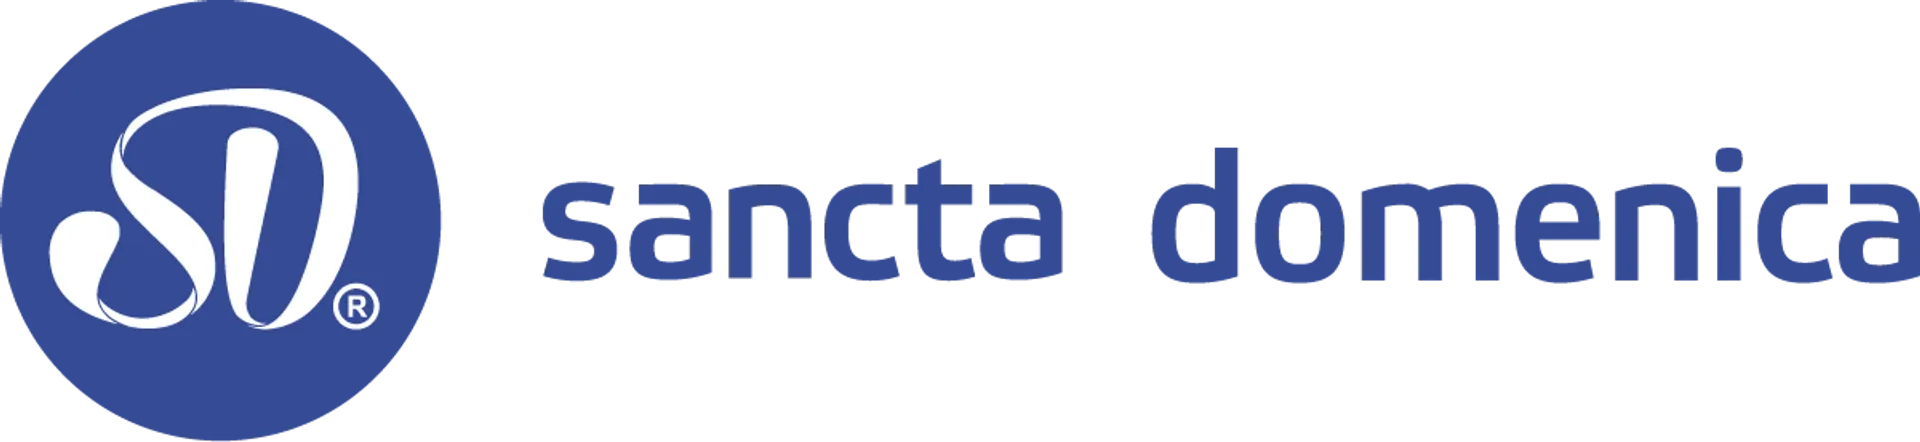 SANCTA DOMENICA logo